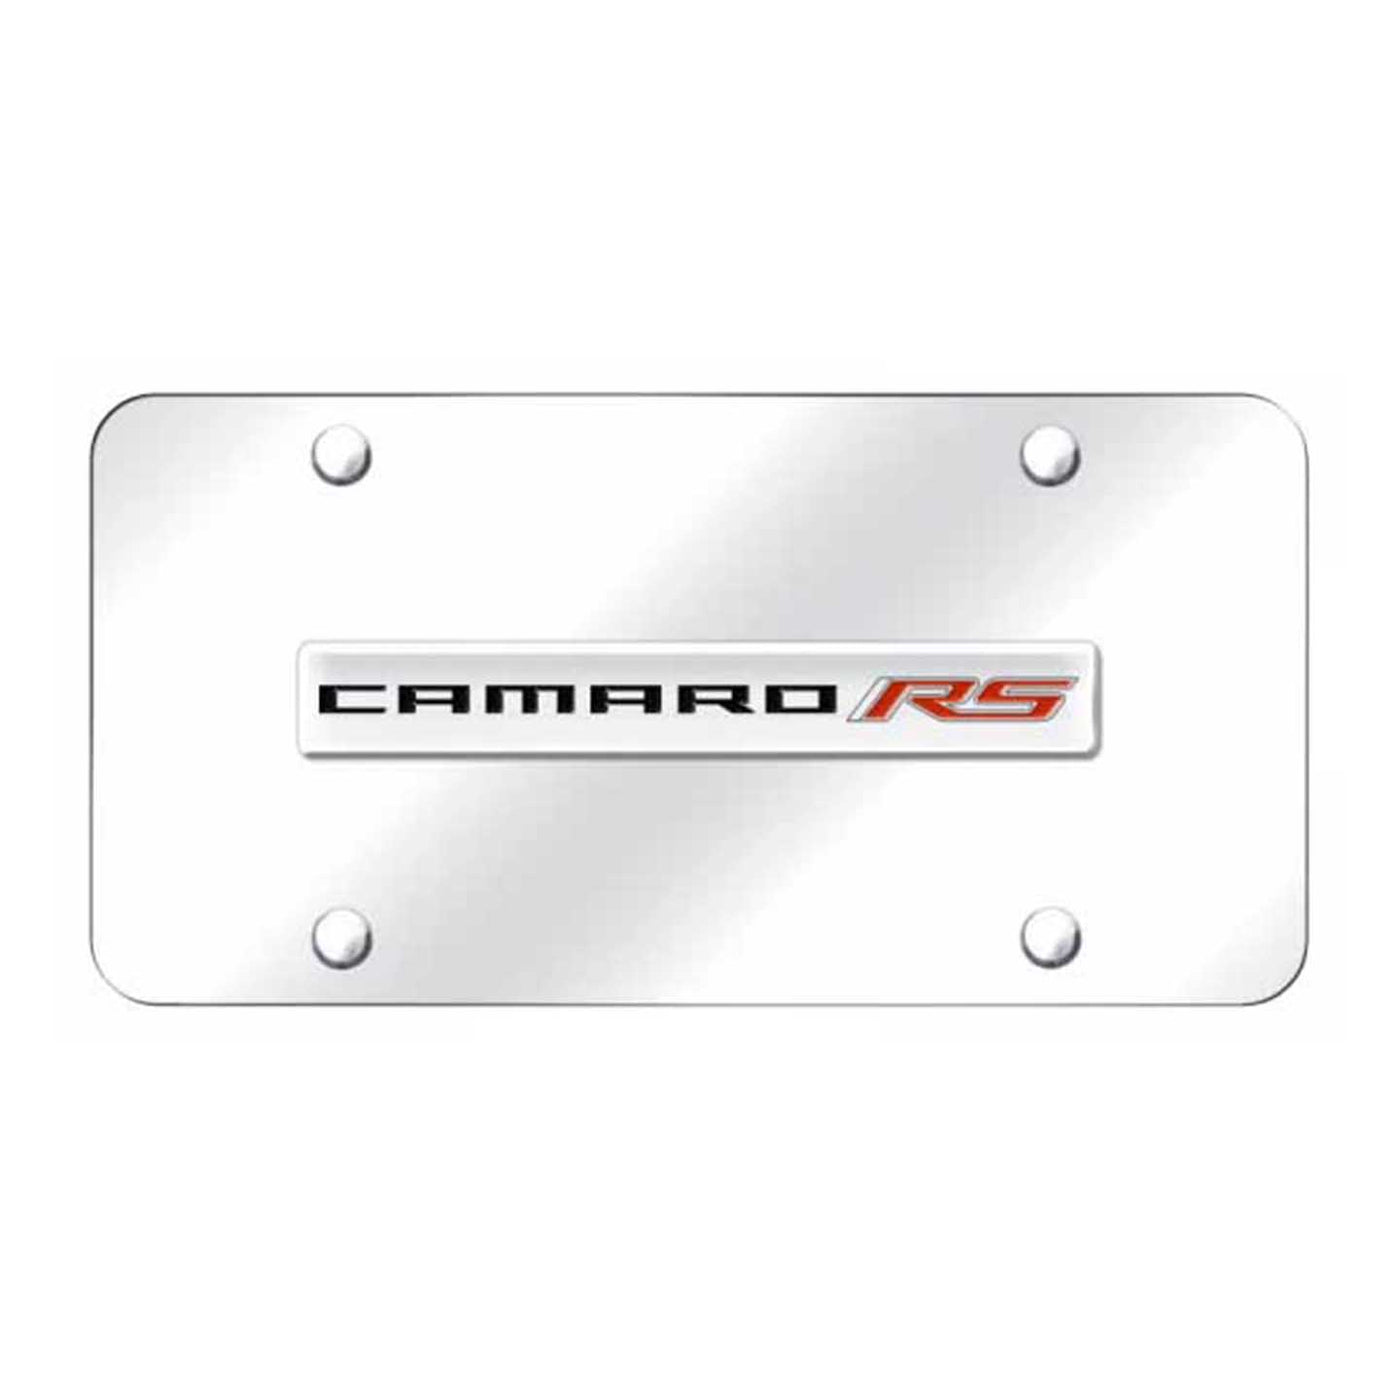 Camaro RS Name License Plate - Chrome on Mirrored